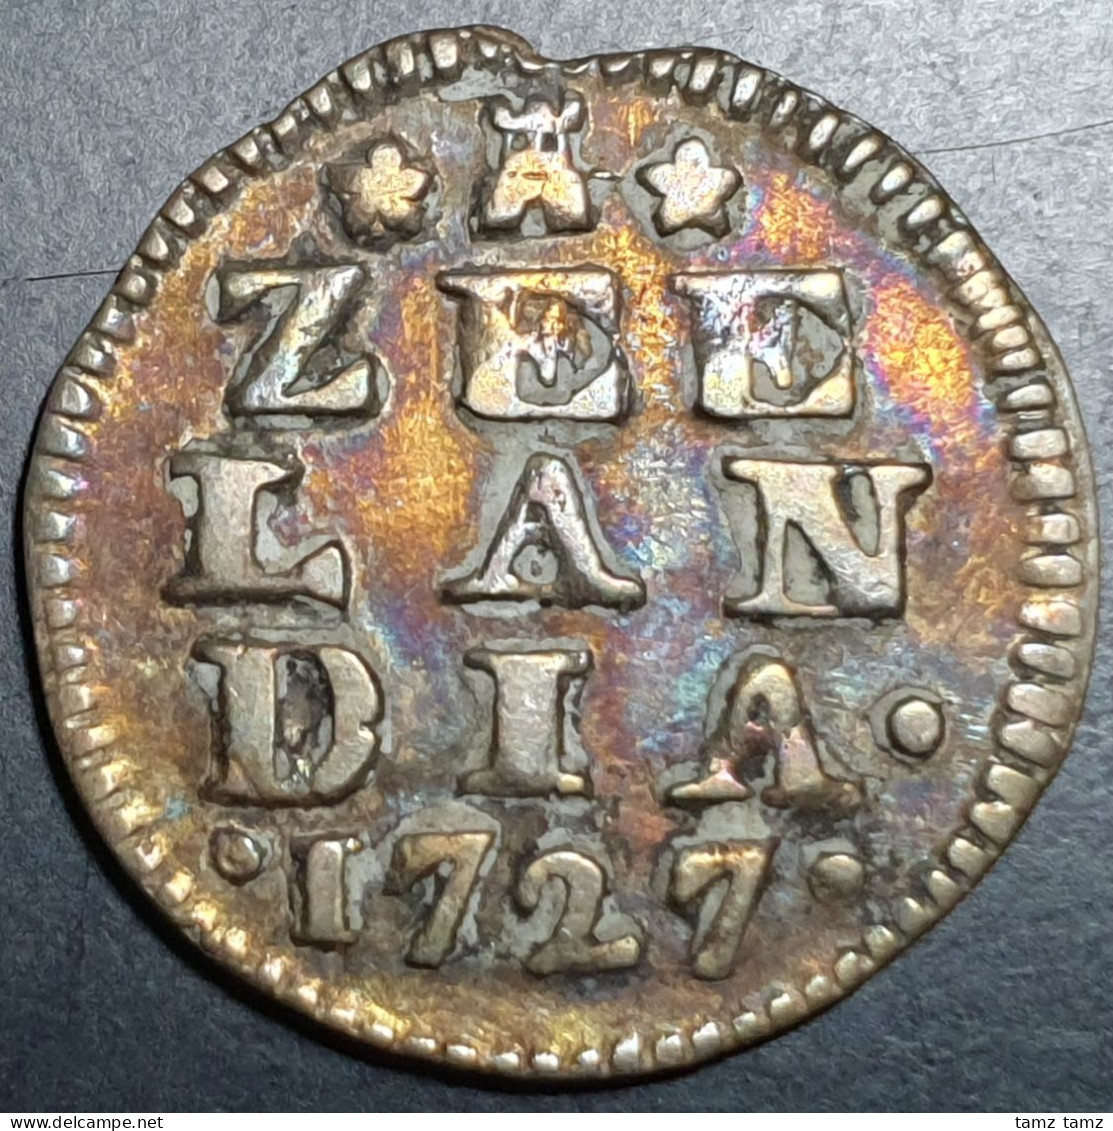 Provincial Dutch Netherlands Zeeland Zeelandia 2 Stuiver 1727 Silver Nice Toning - Monnaies Provinciales